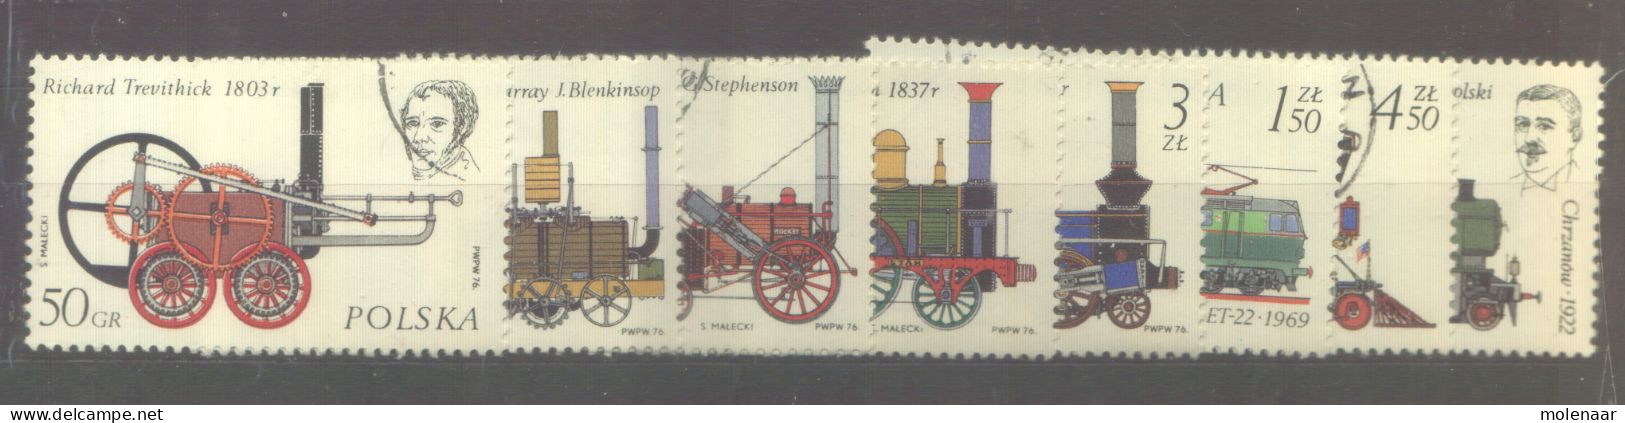 Postzegels > Europa > Polen > 1944-.... Republiek > 1971-80 > Gebruikt No. 2424-2431 (24129) - Gebraucht